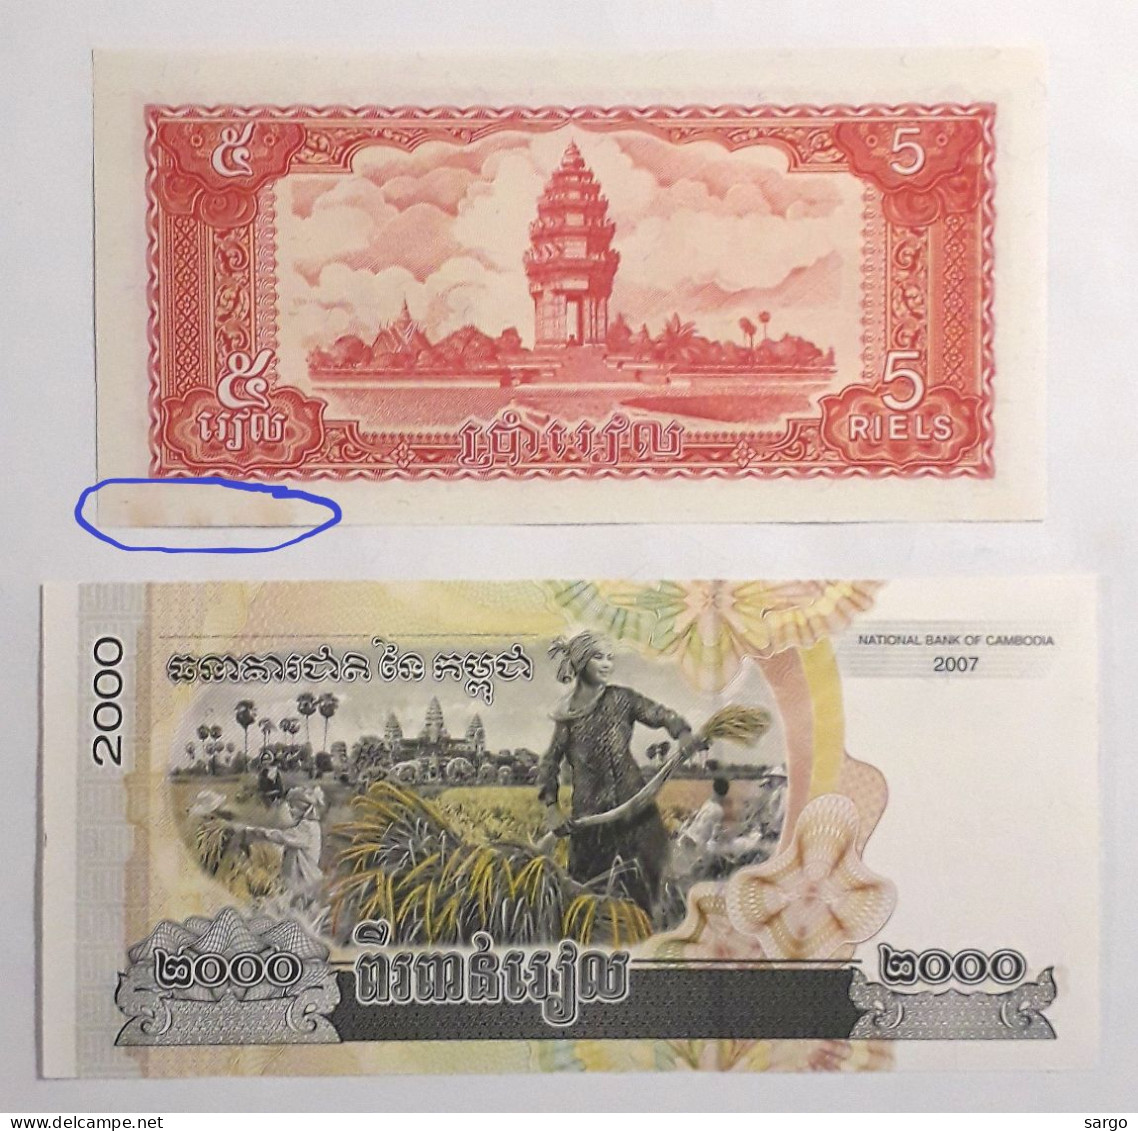 CAMBODIA - 5,2.000 RIELS - PIC 33, PIC 59 (1997-2007) - UNC - 2 PCS - BANKNOTES - PAPER MONEY - CARTAMONETA - - Cambogia